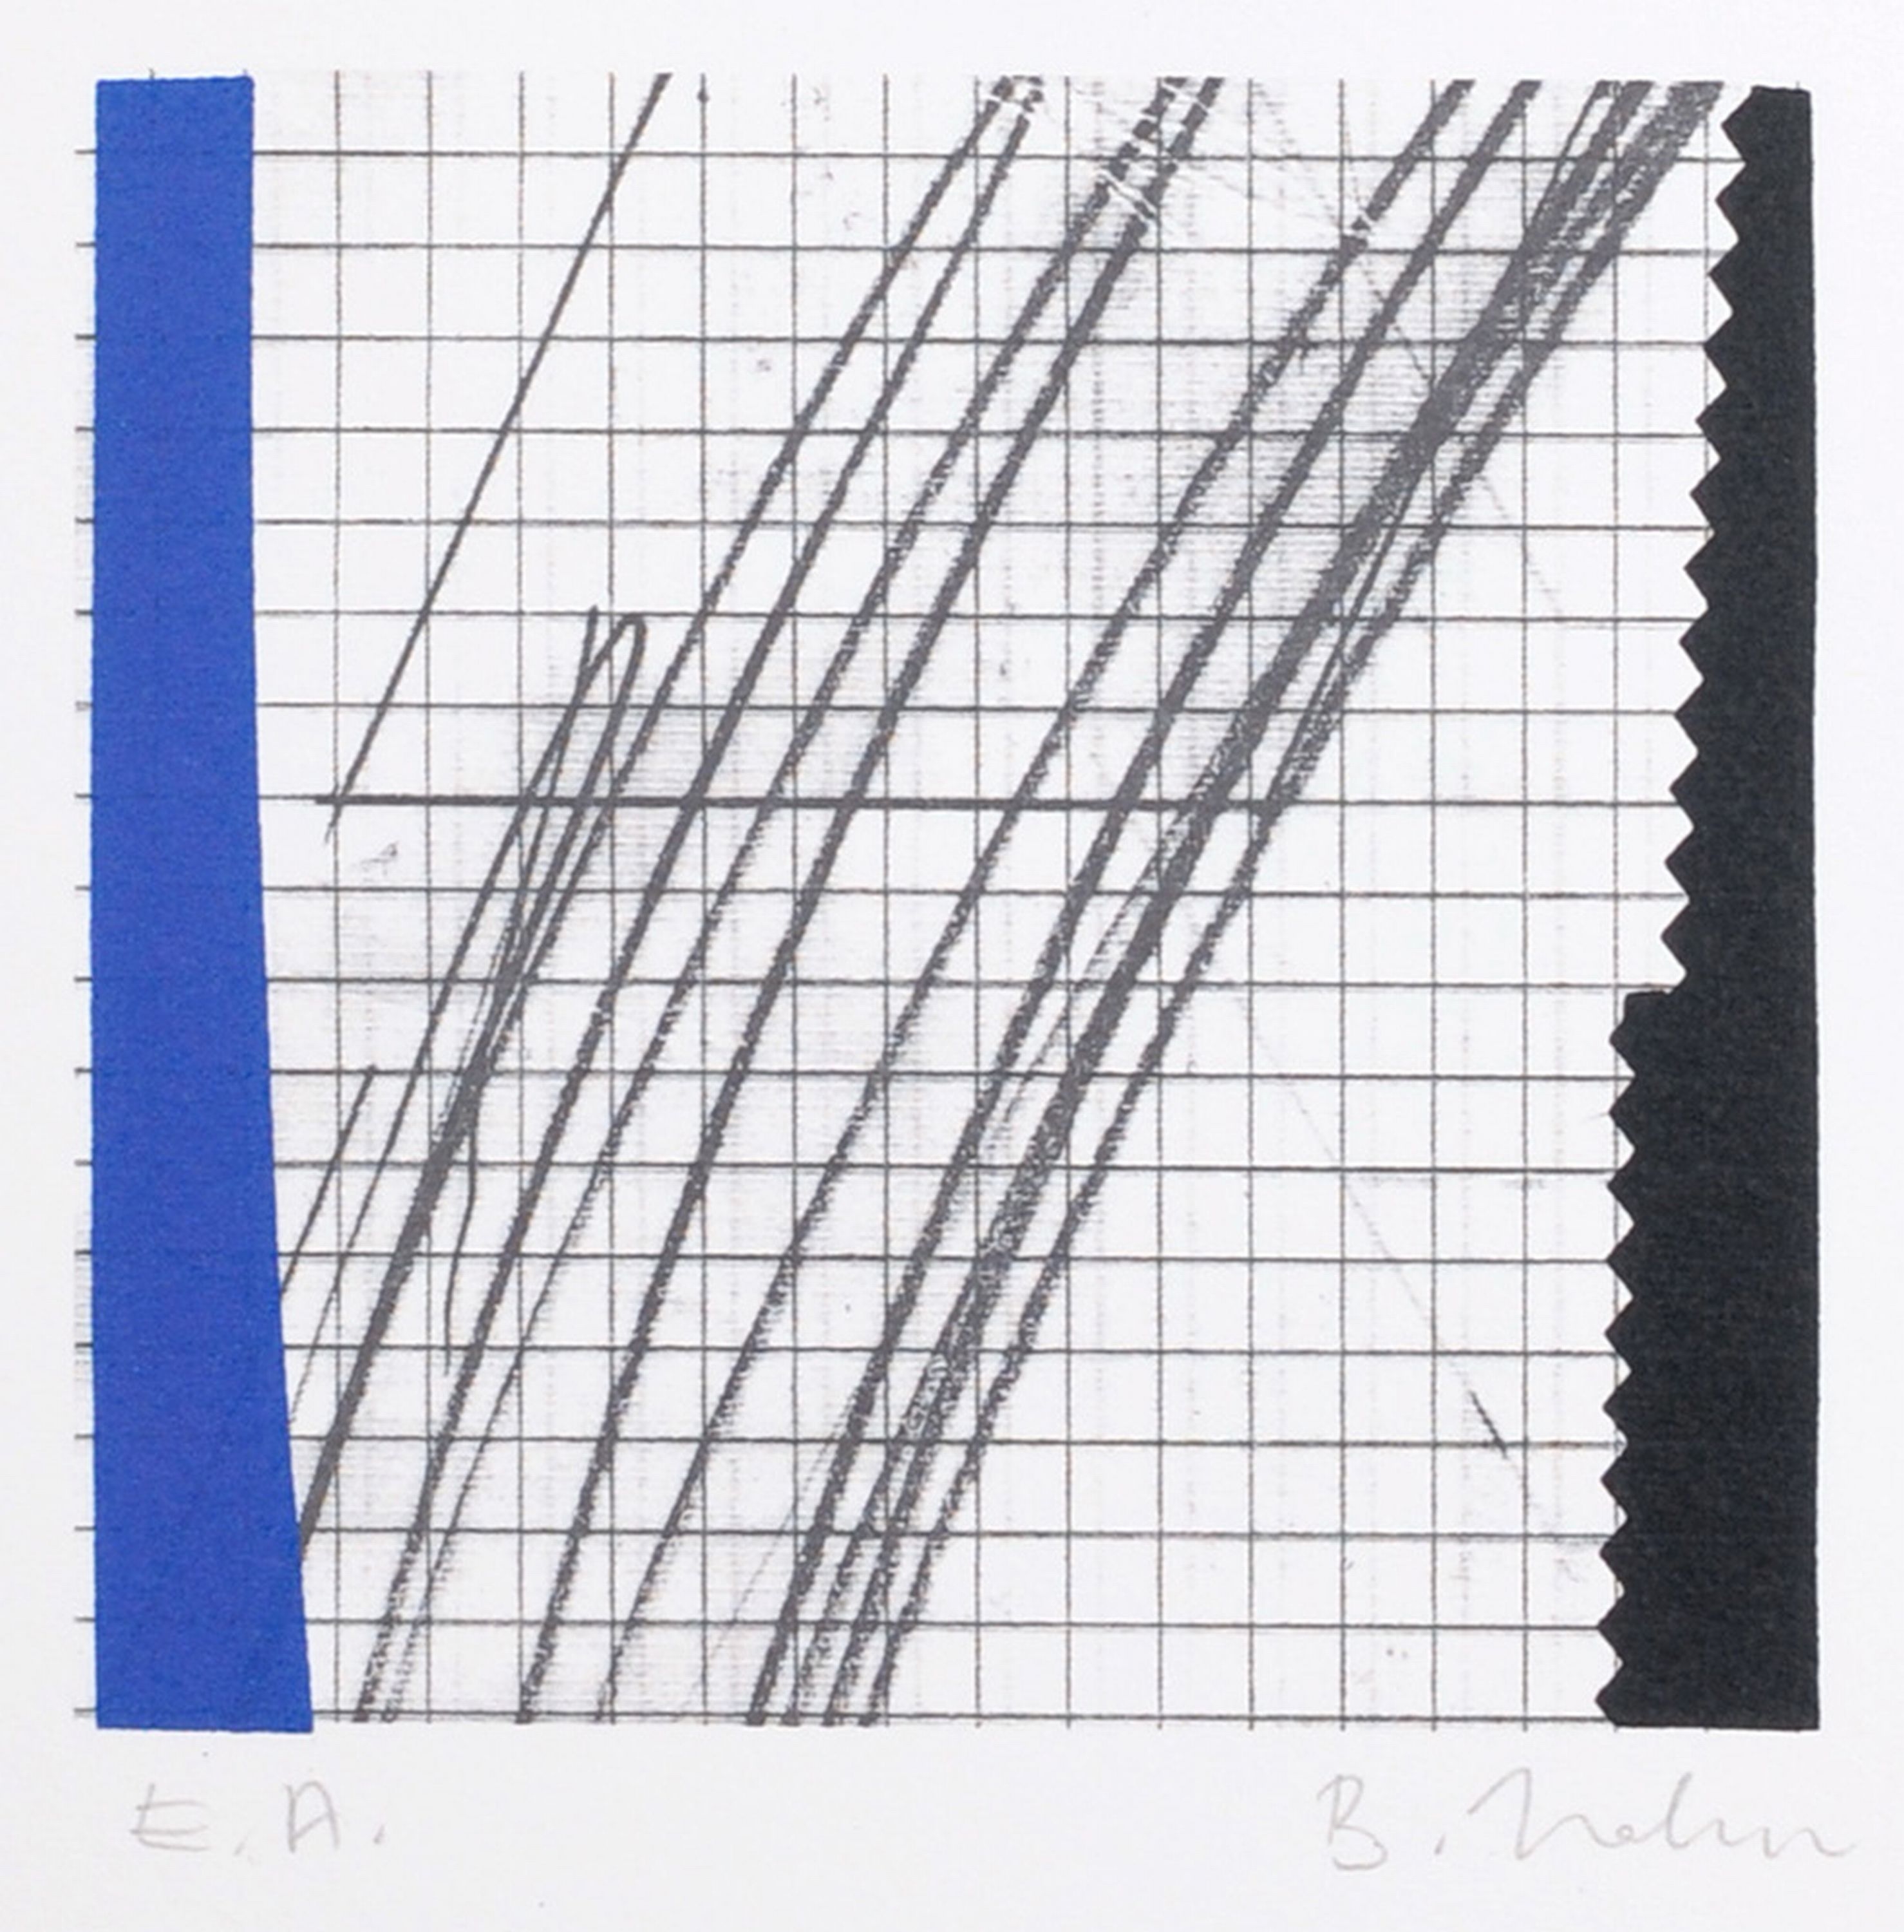 Six works: Grafikkalender (6) by Bernd Hahn, 2001